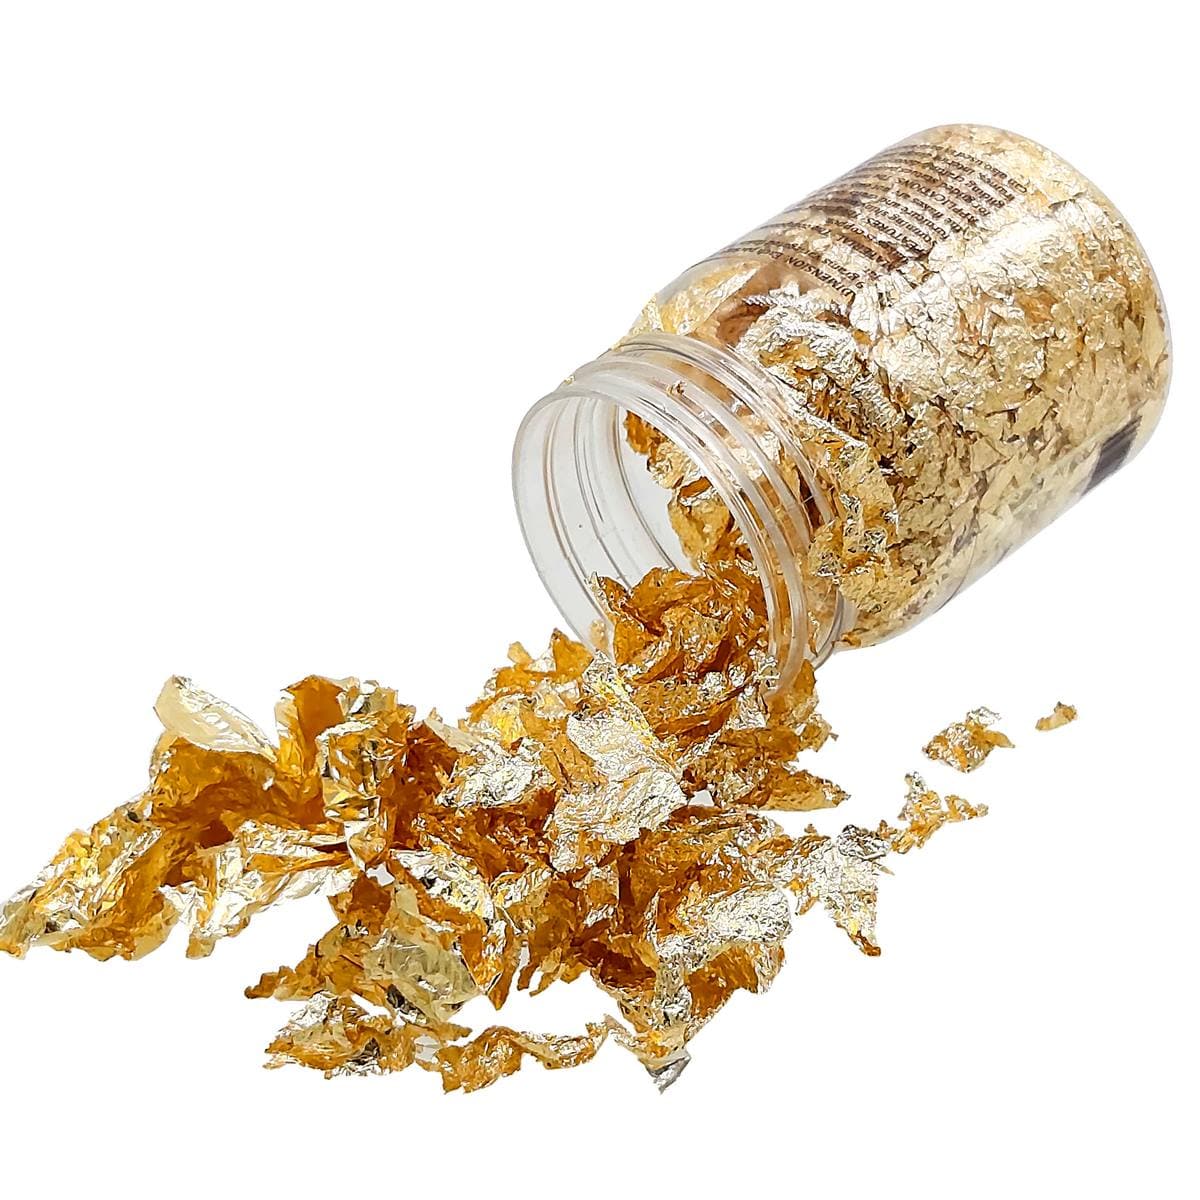 jags-mumbai Glitter Powder JAGS Gilding Flakes Small Bottel Gold